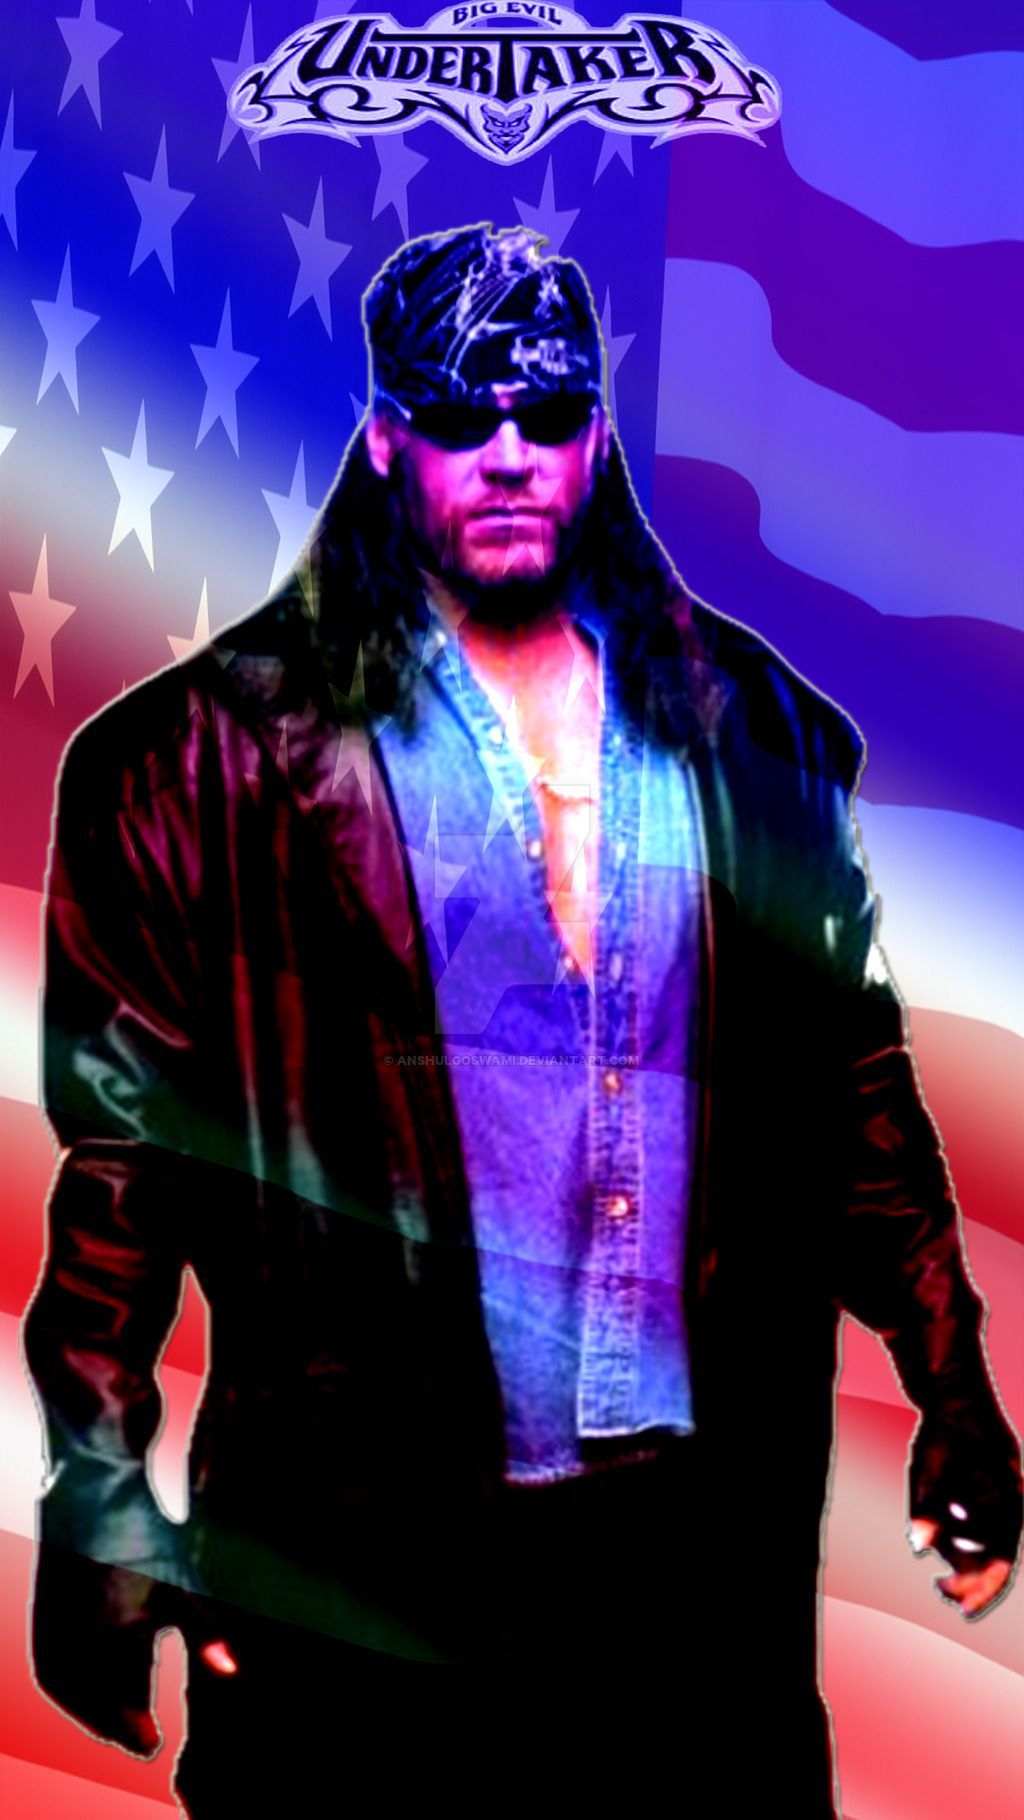 Badass America Wallpaper. Undertaker wwf, Wrestling wwe, Wwf